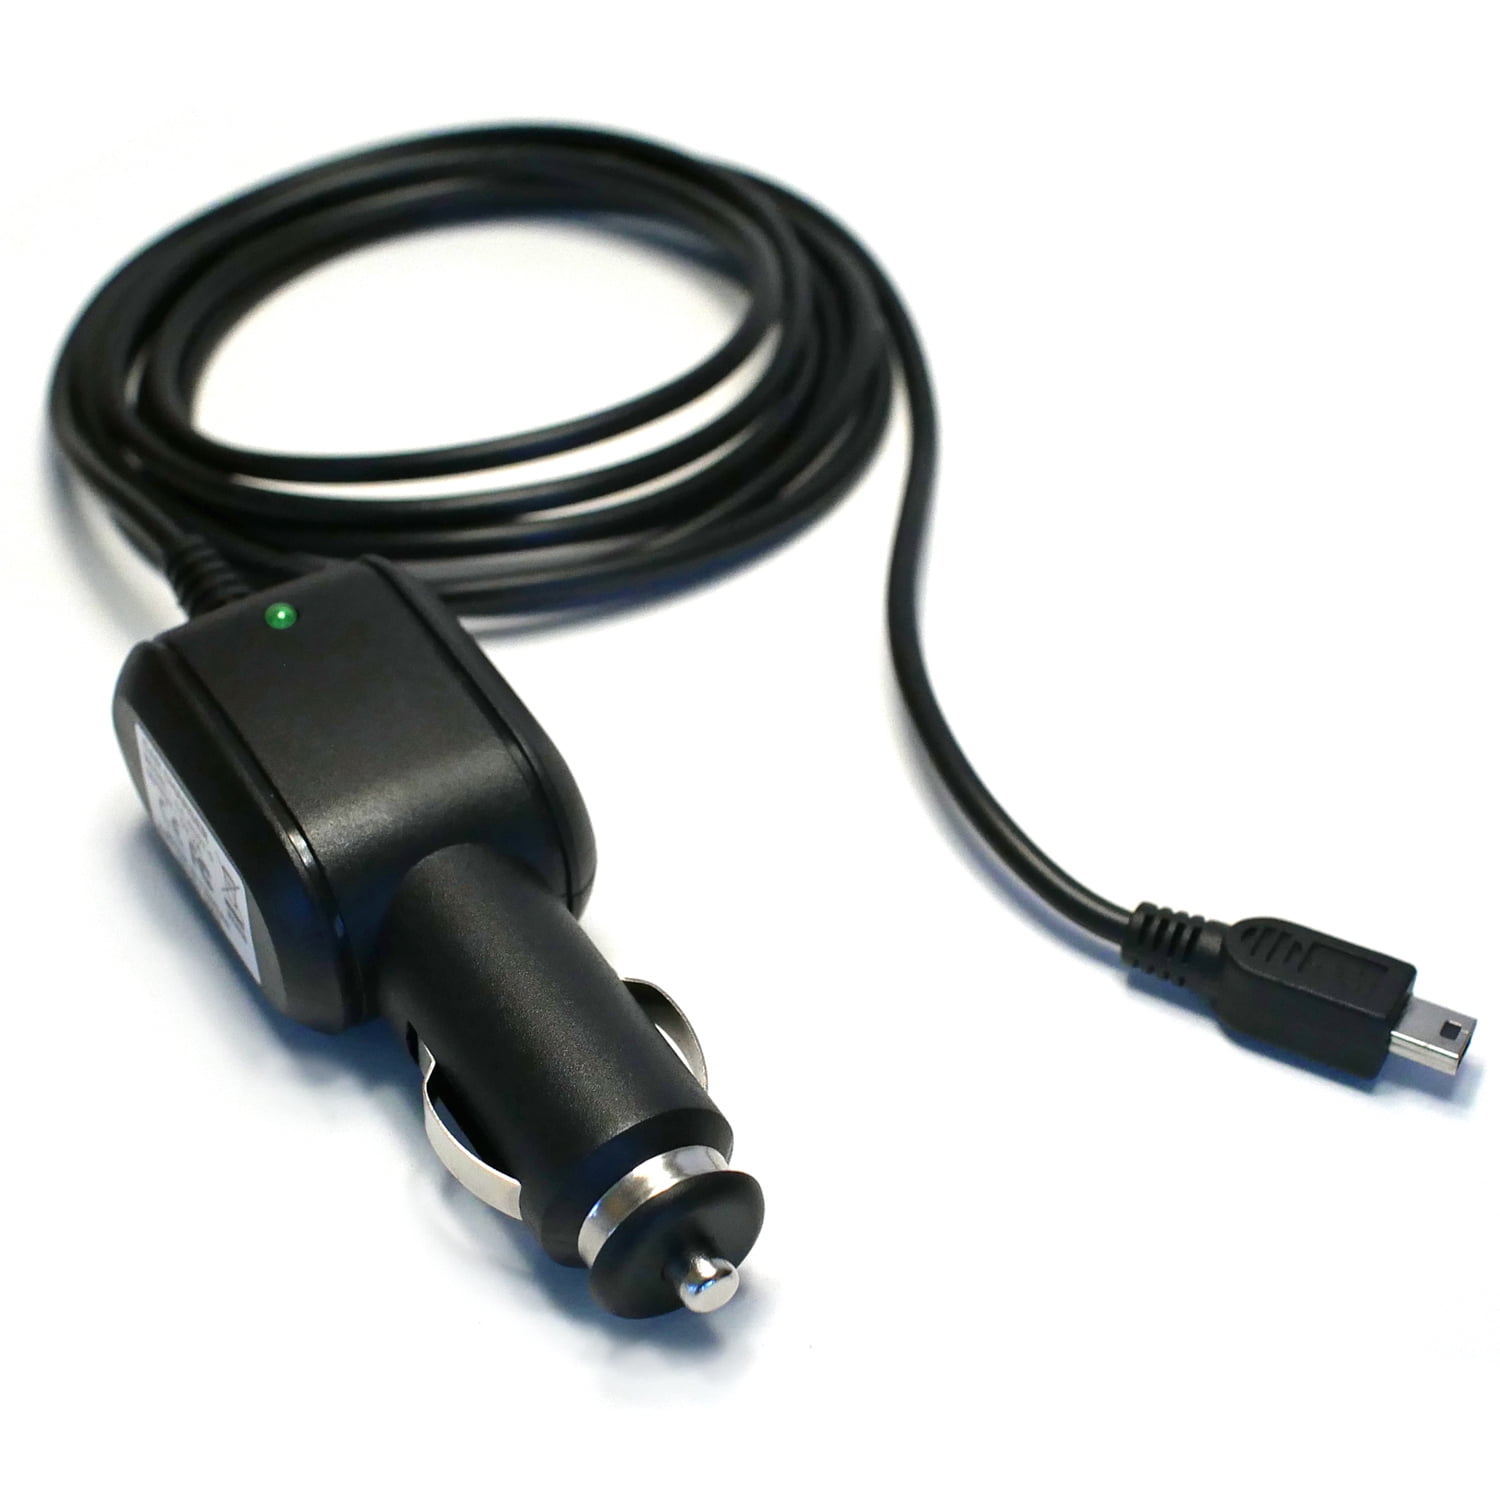 Dash Cam Charger, Dosili car Dash cam USB Power Cord, Micro USB & Mini USB  Cable, for Dash Camera an…See more Dash Cam Charger, Dosili car Dash cam